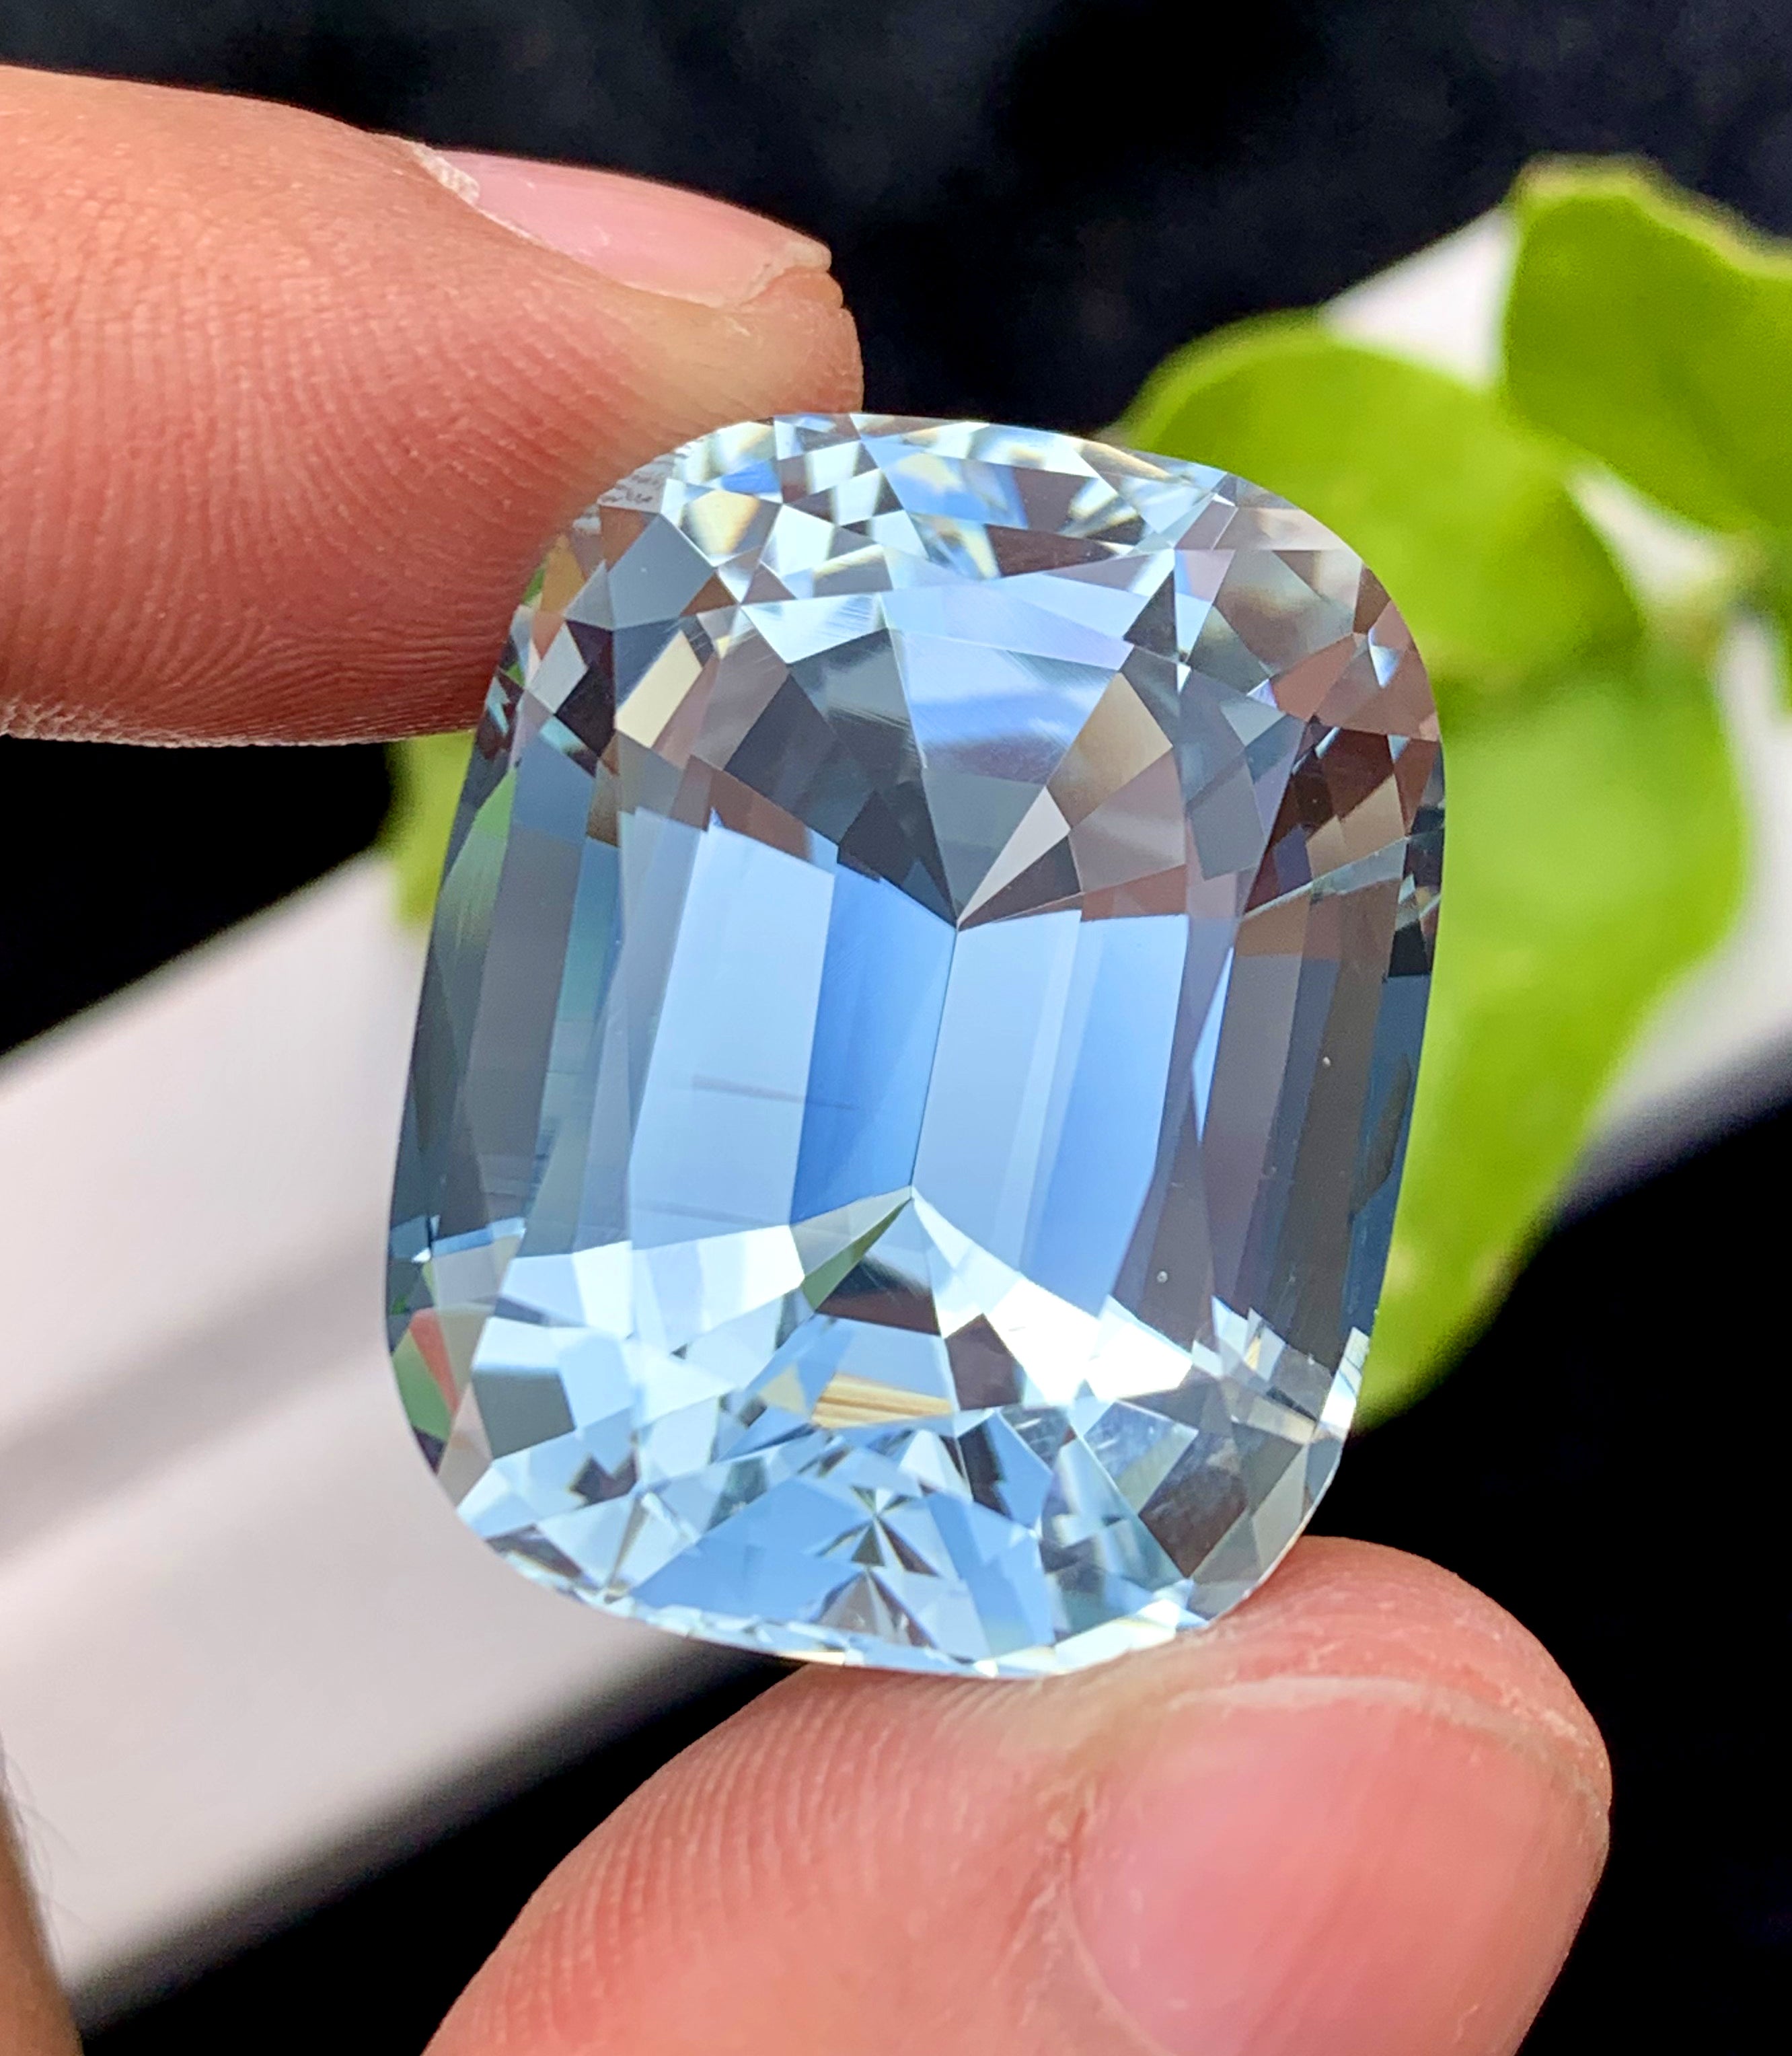 Cusshion Cut Natural Aquamarne Gemstone, Loose Gemstone, Aqua Faceted Cut Stone, Gemstone Jewelry - 52.65 CT